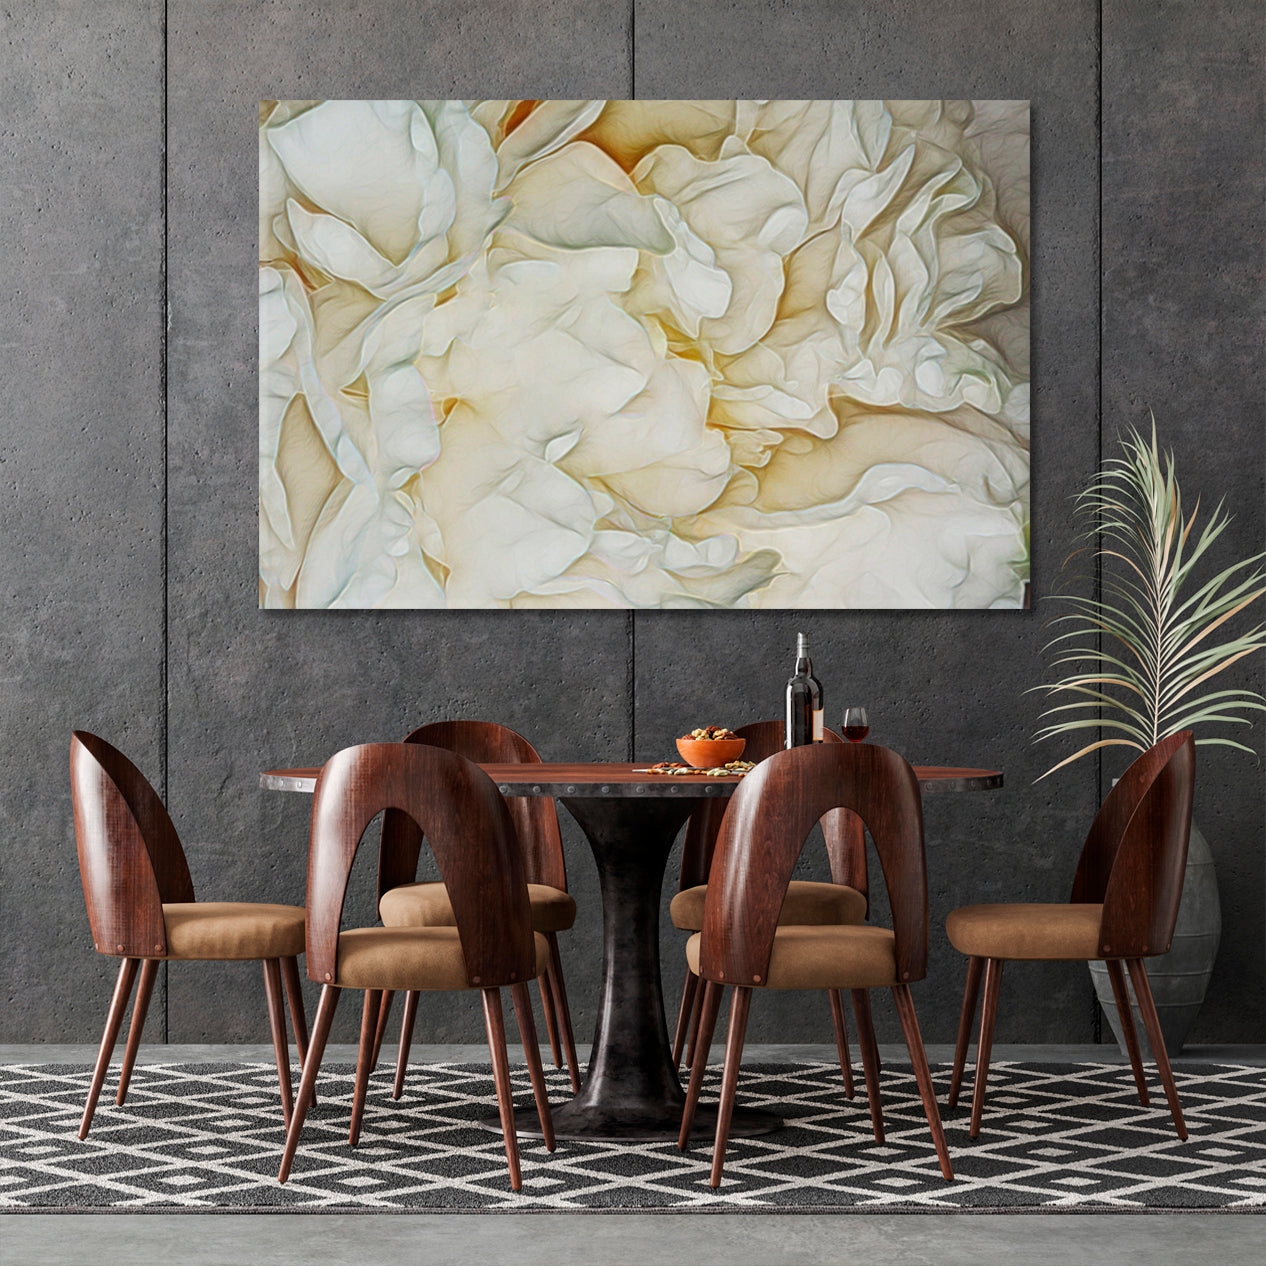 Creamy Pastel Peony Petals Abstract Pattern Shapes Swirls Canvas Print Floral & Botanical Split Art Artesty   